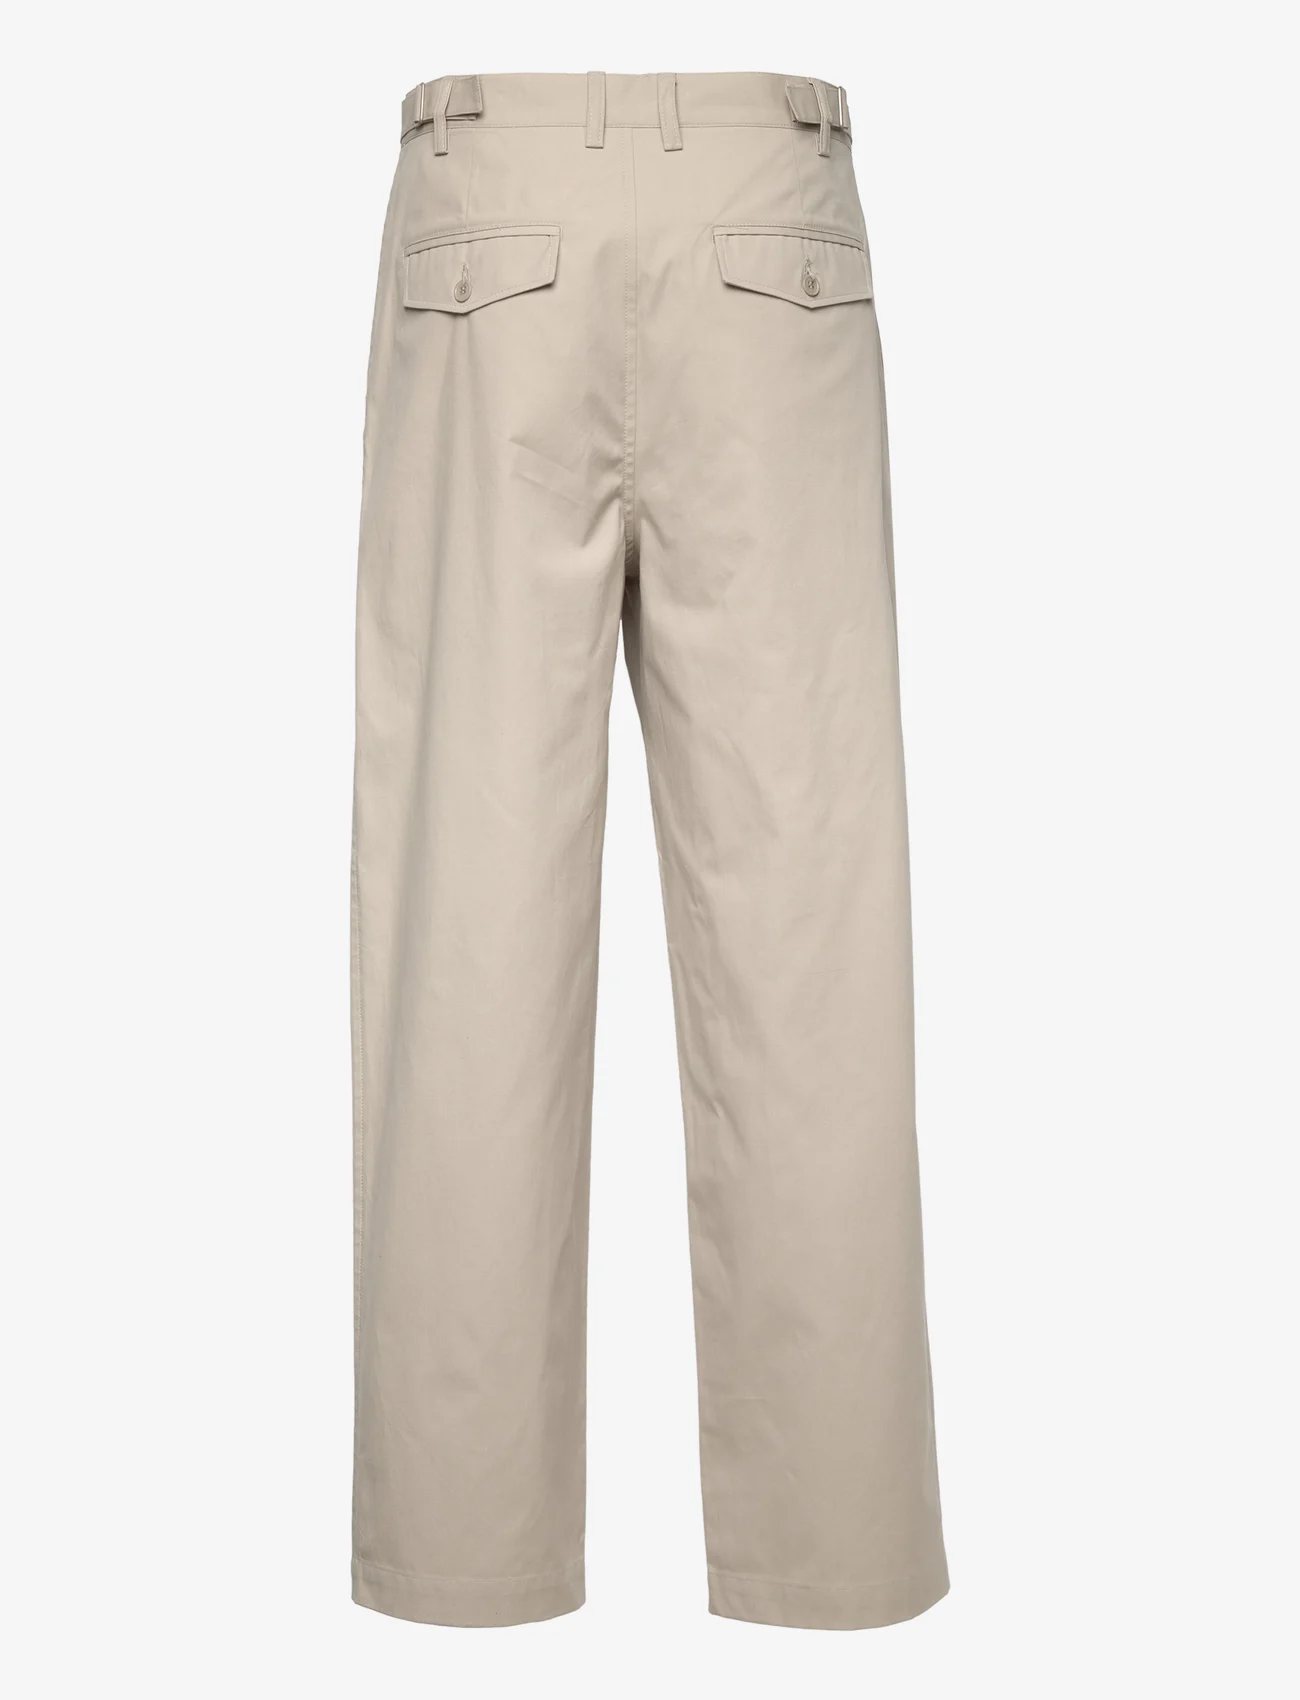 Filippa K - M. Maxwell Cotton Trouser - grey beige - 1